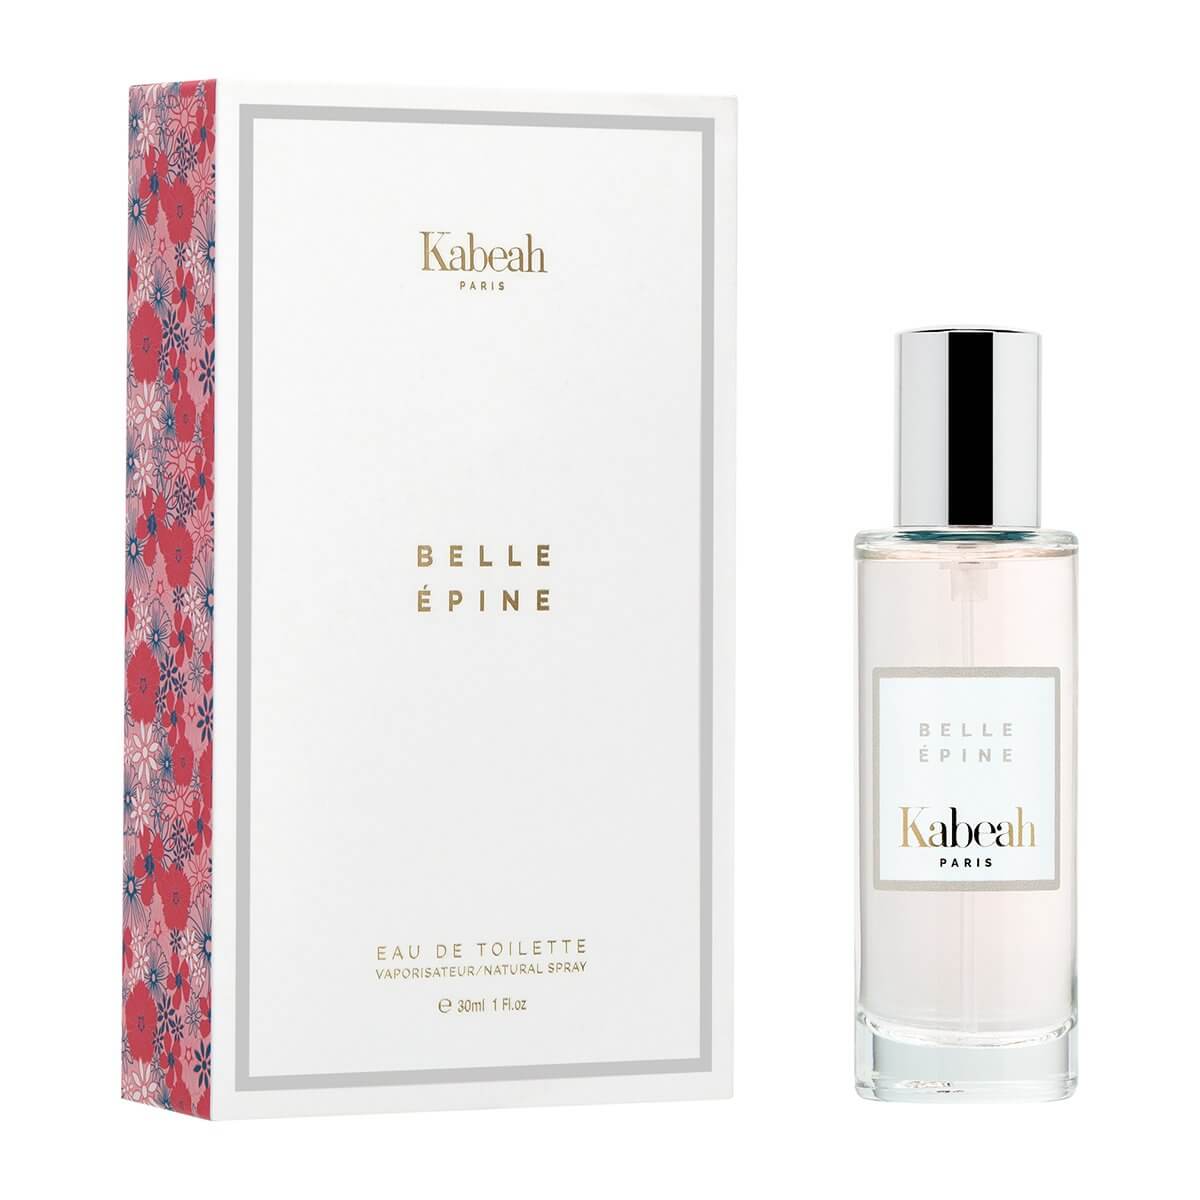 Belle Epine by Kabeah 30 ml. at Indigo Perfumery